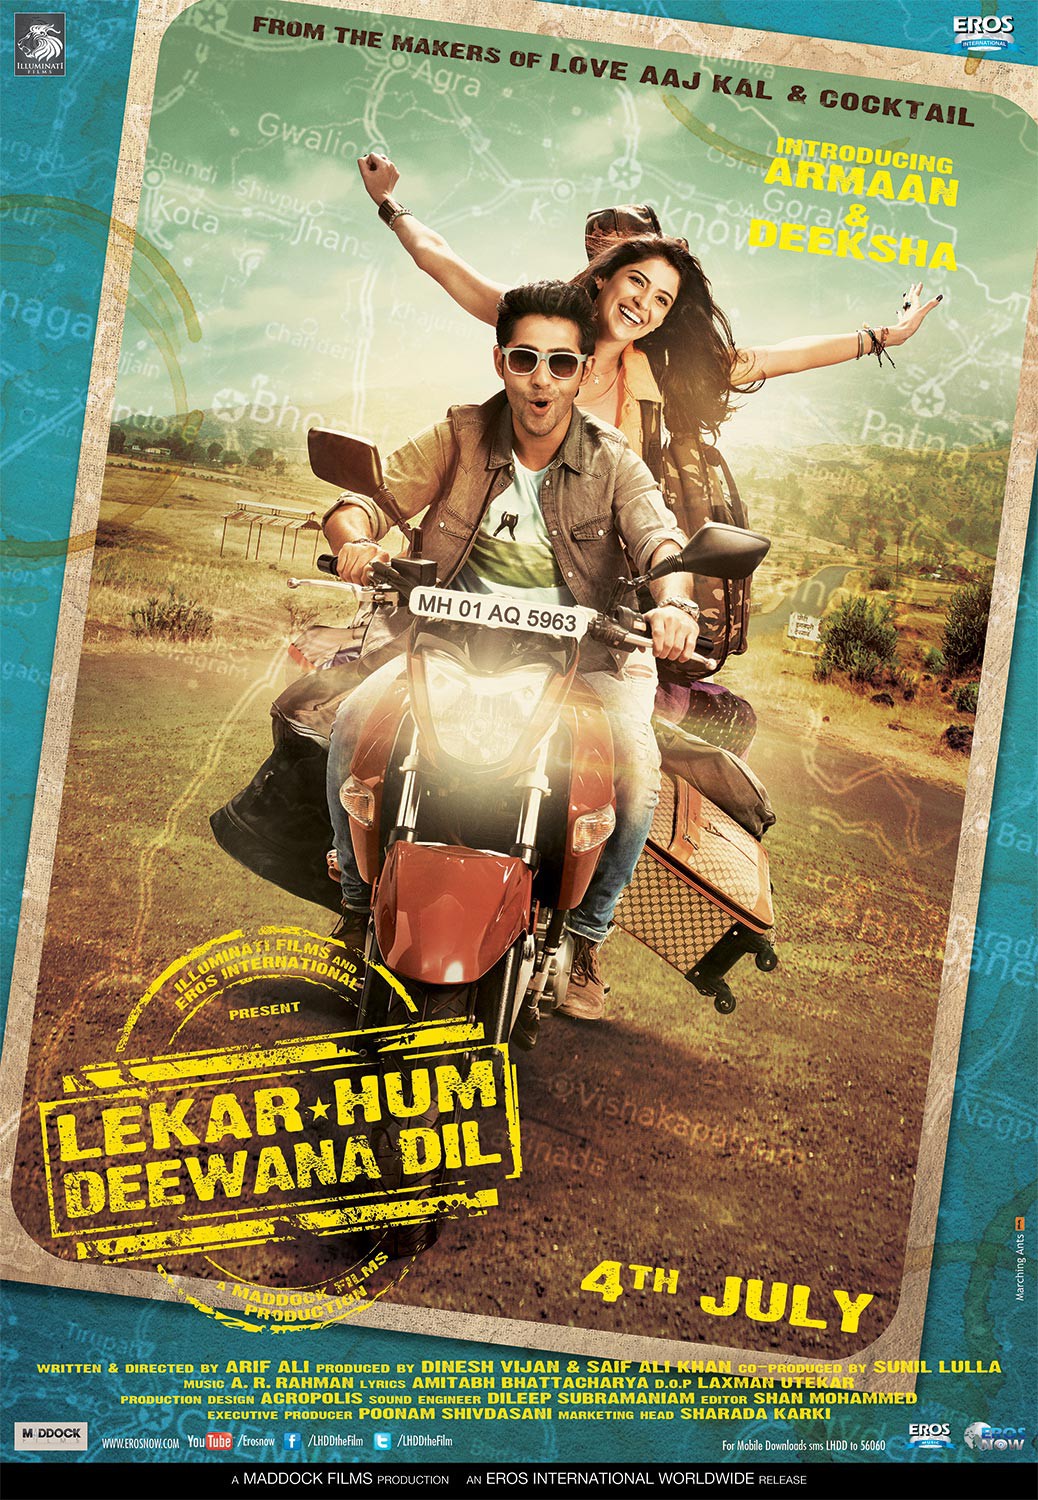 Dowanload Lekar Hum Deewana Dil (2014) 480p HDRip Full Hindi Movie [400MB]